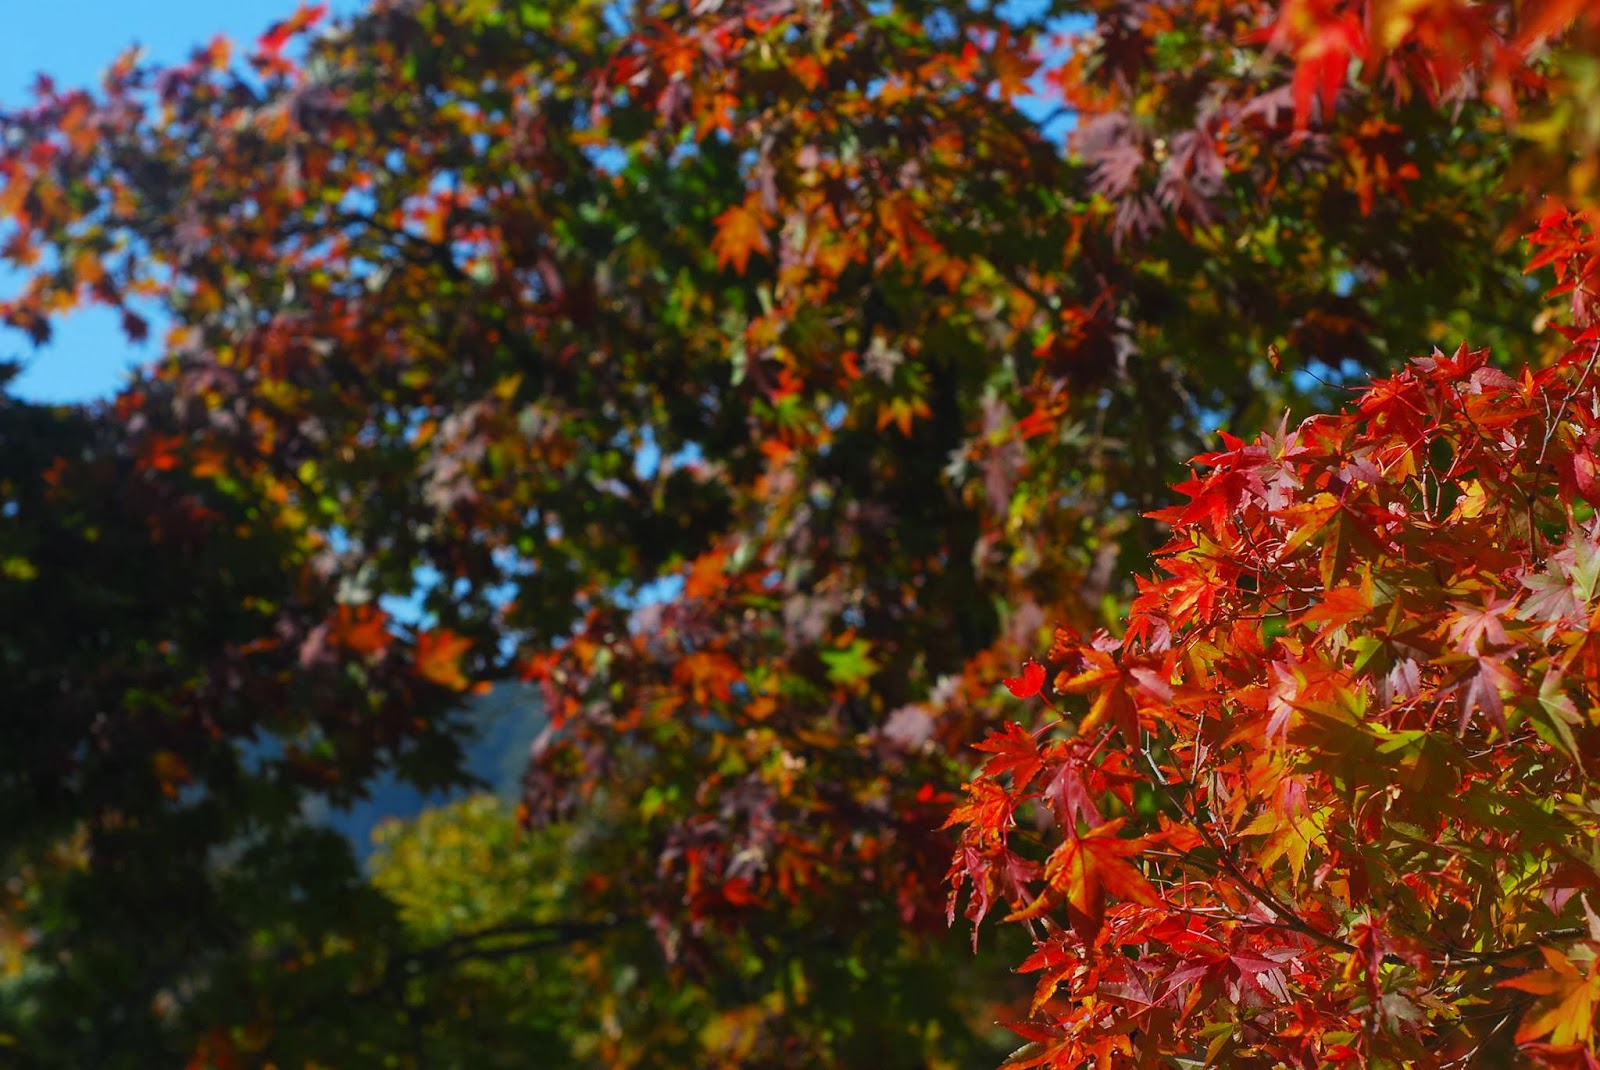 SARA NAIL: Autumn in Korea with amazing colors, Korea in Autumn 2013